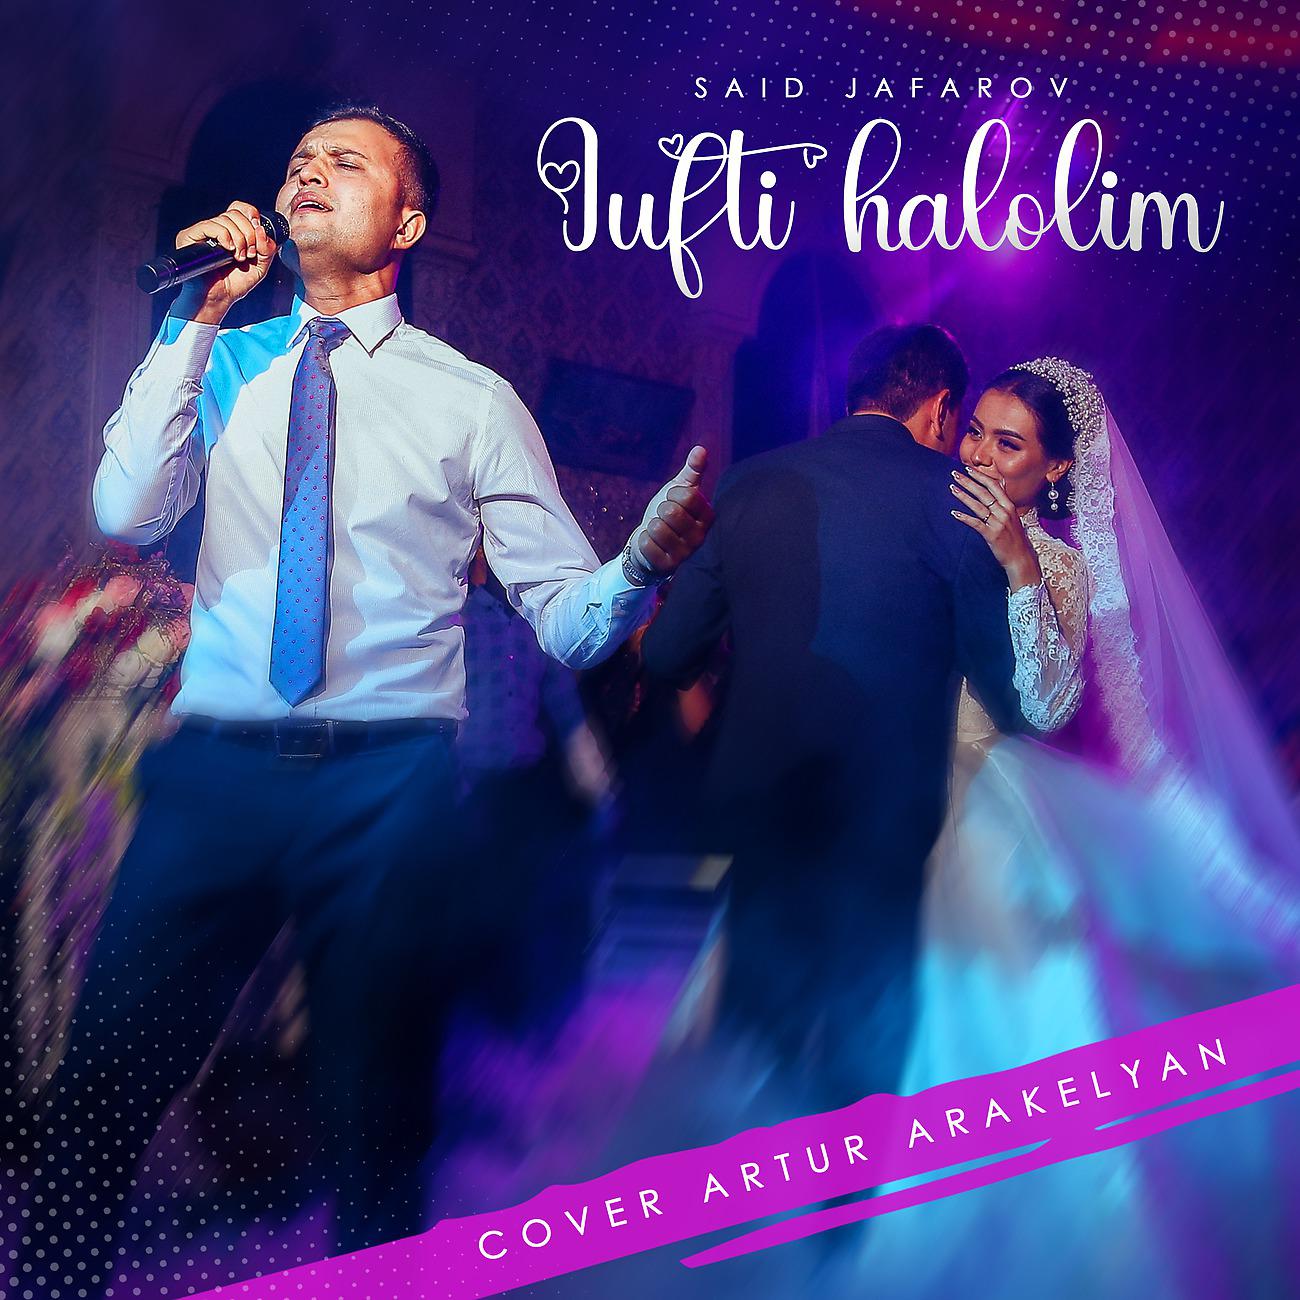 Постер альбома Jufti halolim